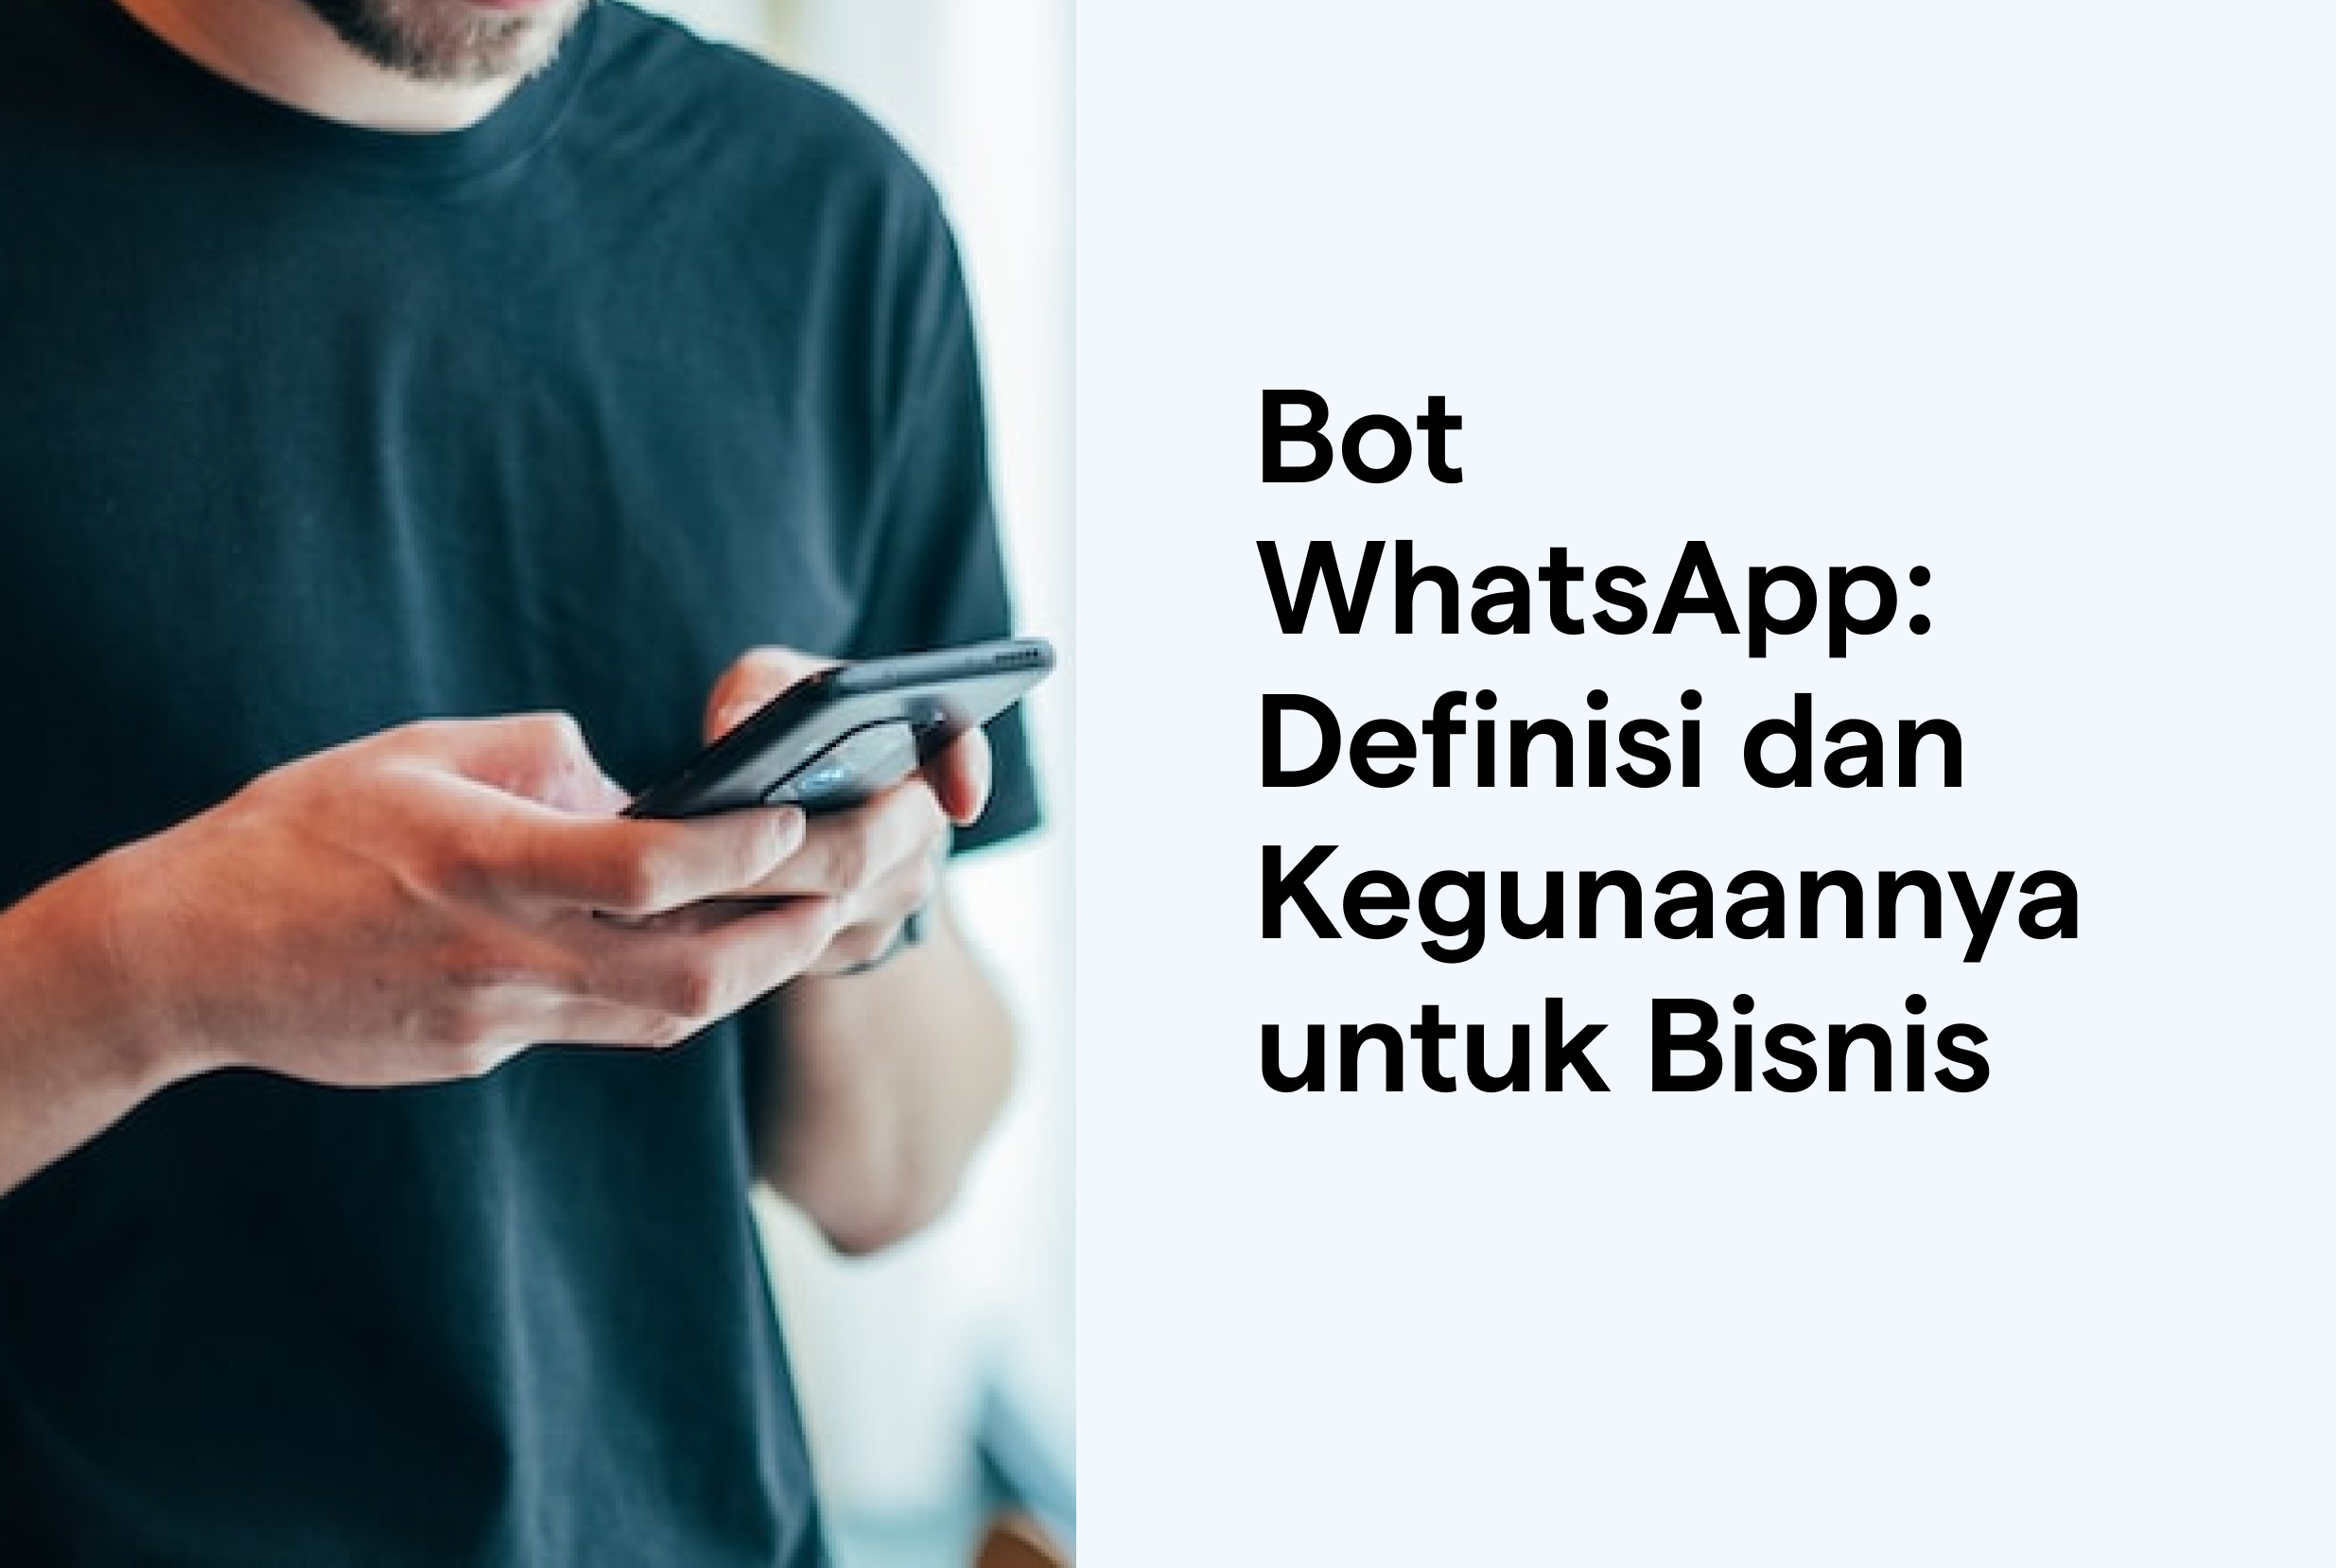 Manfaat Bot WhatsApp